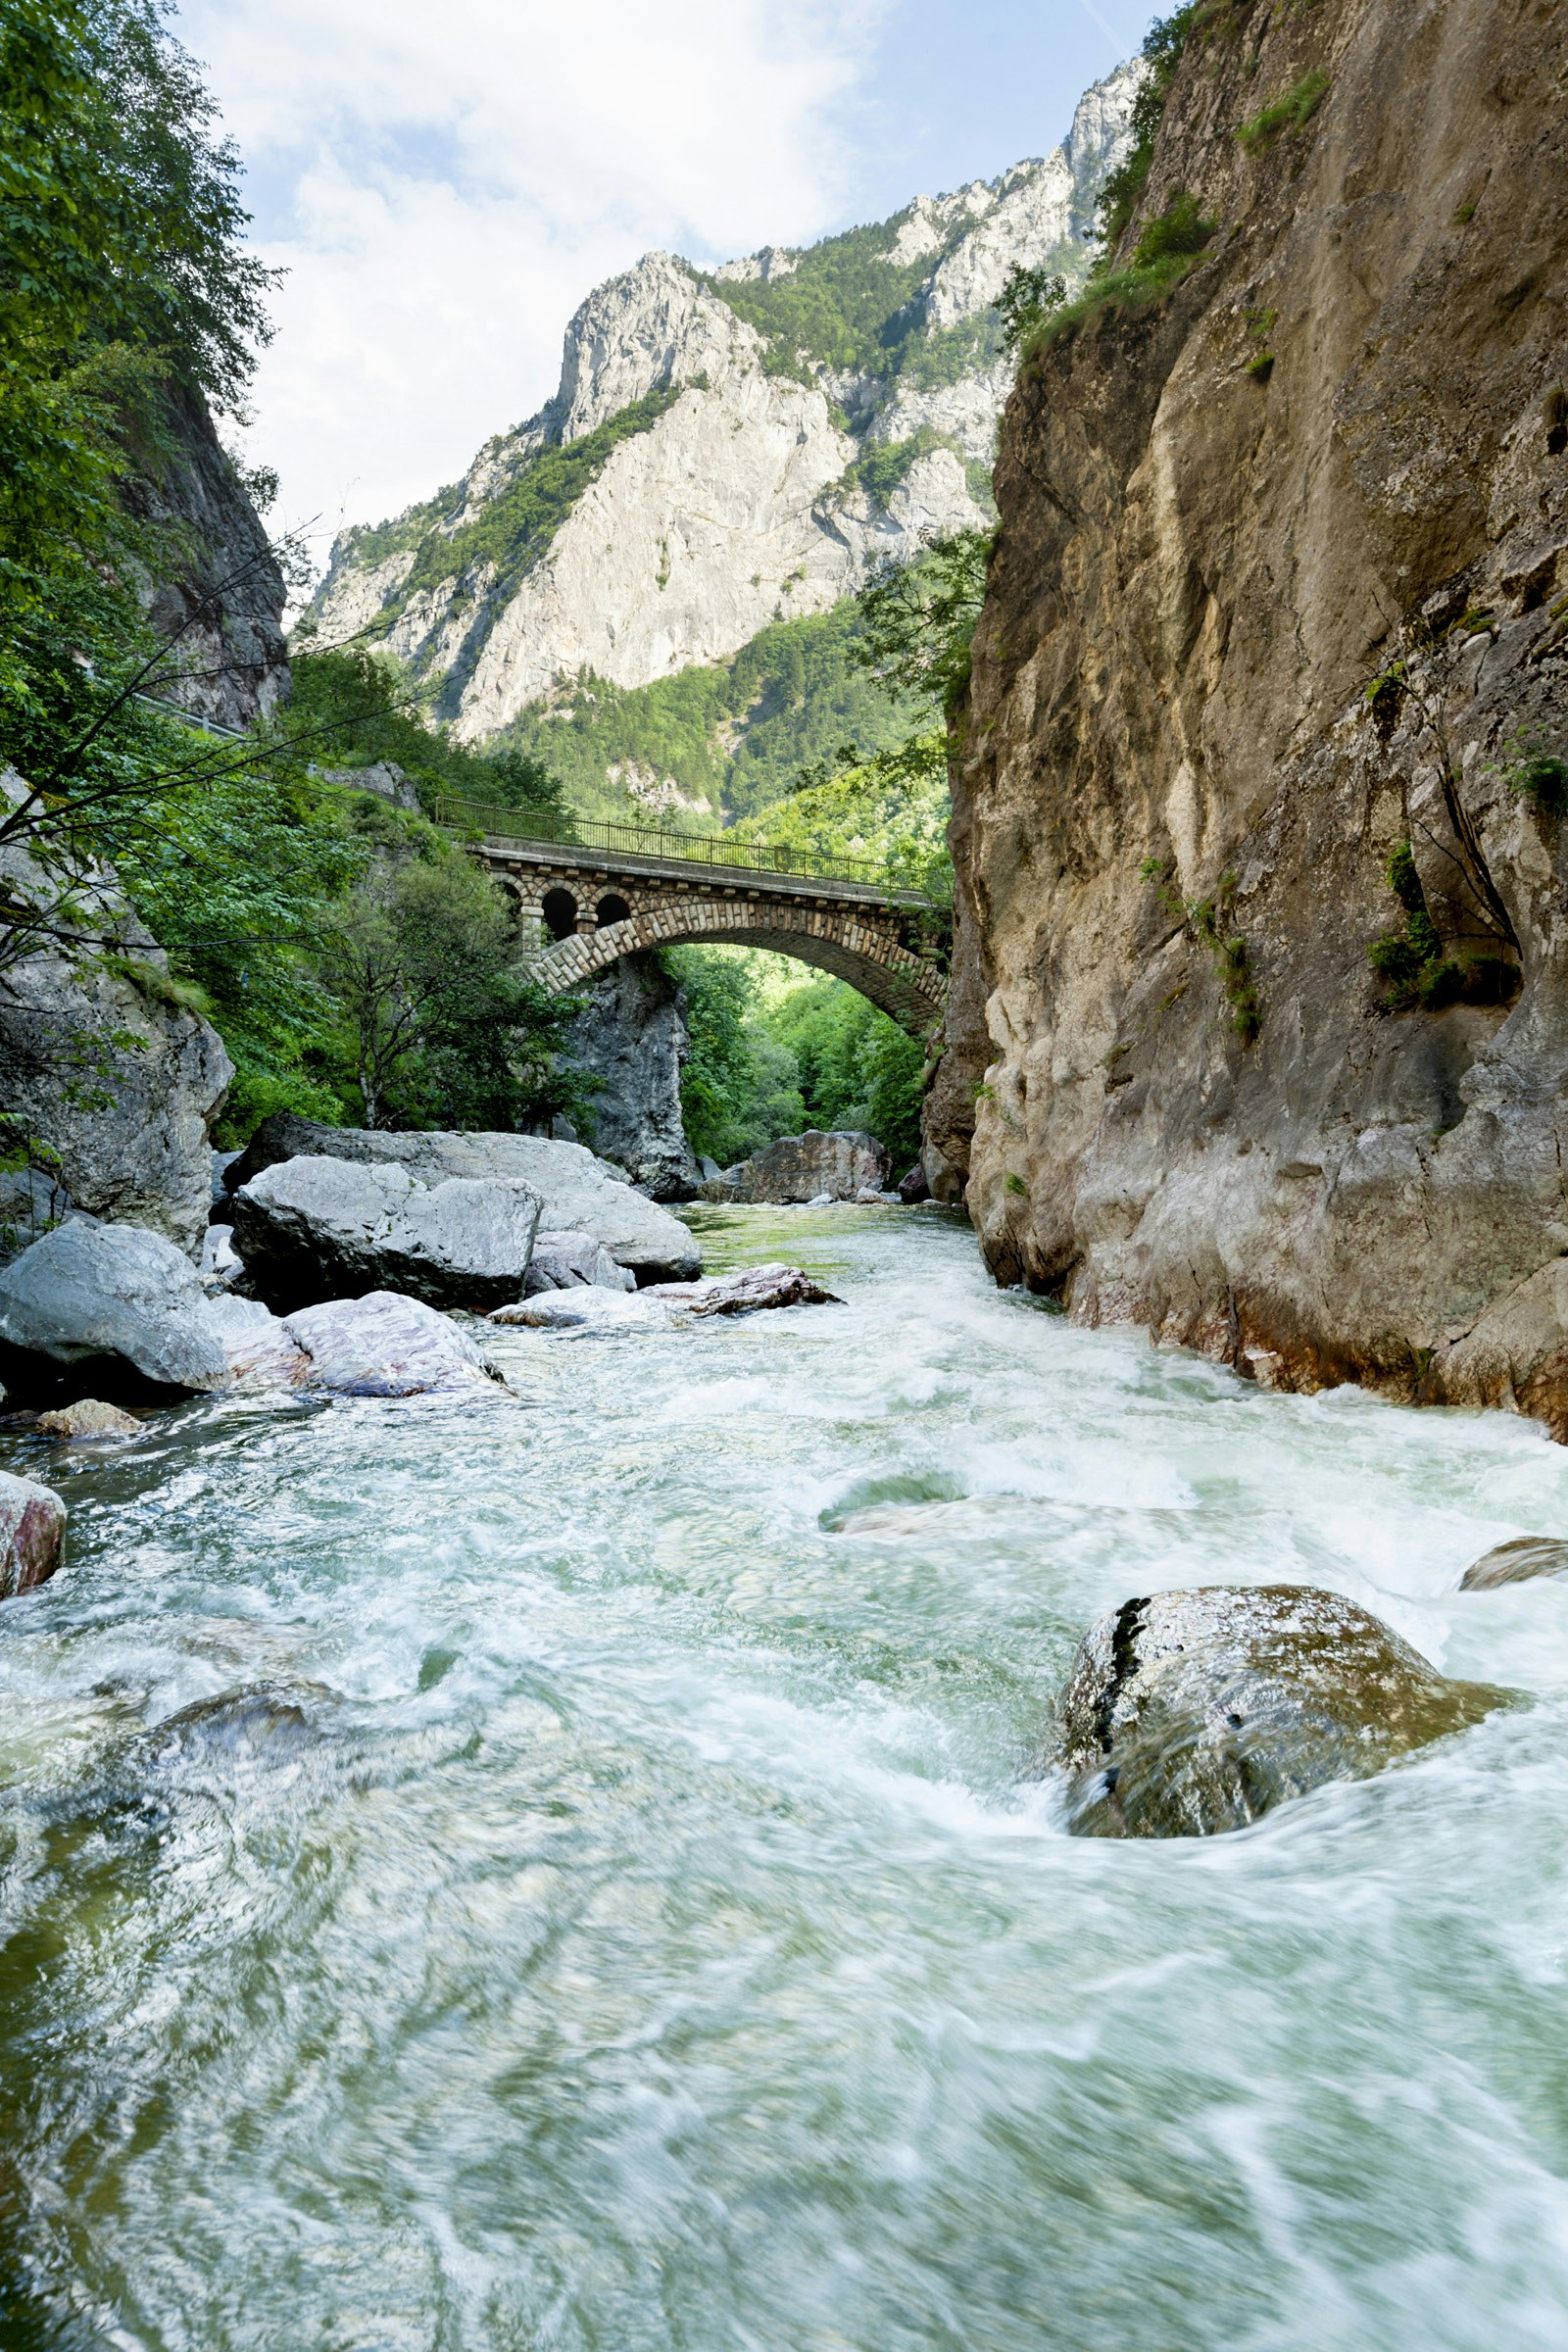 A stone bridge spans a churning river in Rugova Gorge